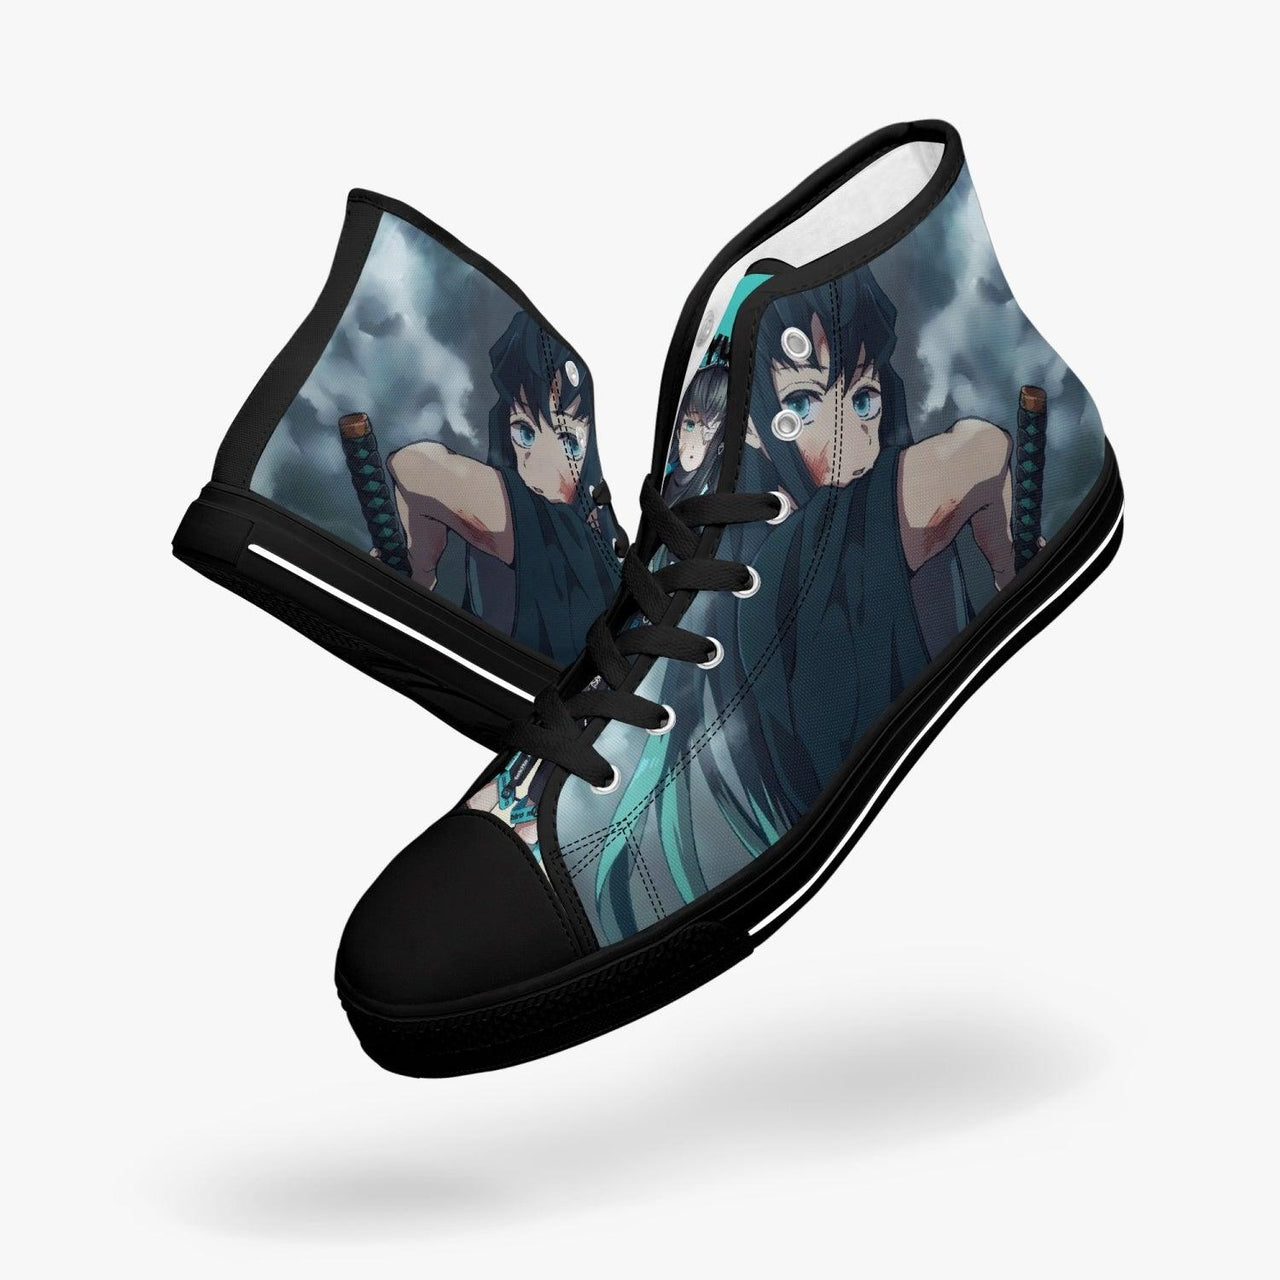 Demon Slayer Muichiro Tokito Custom Anime Skate Shoes